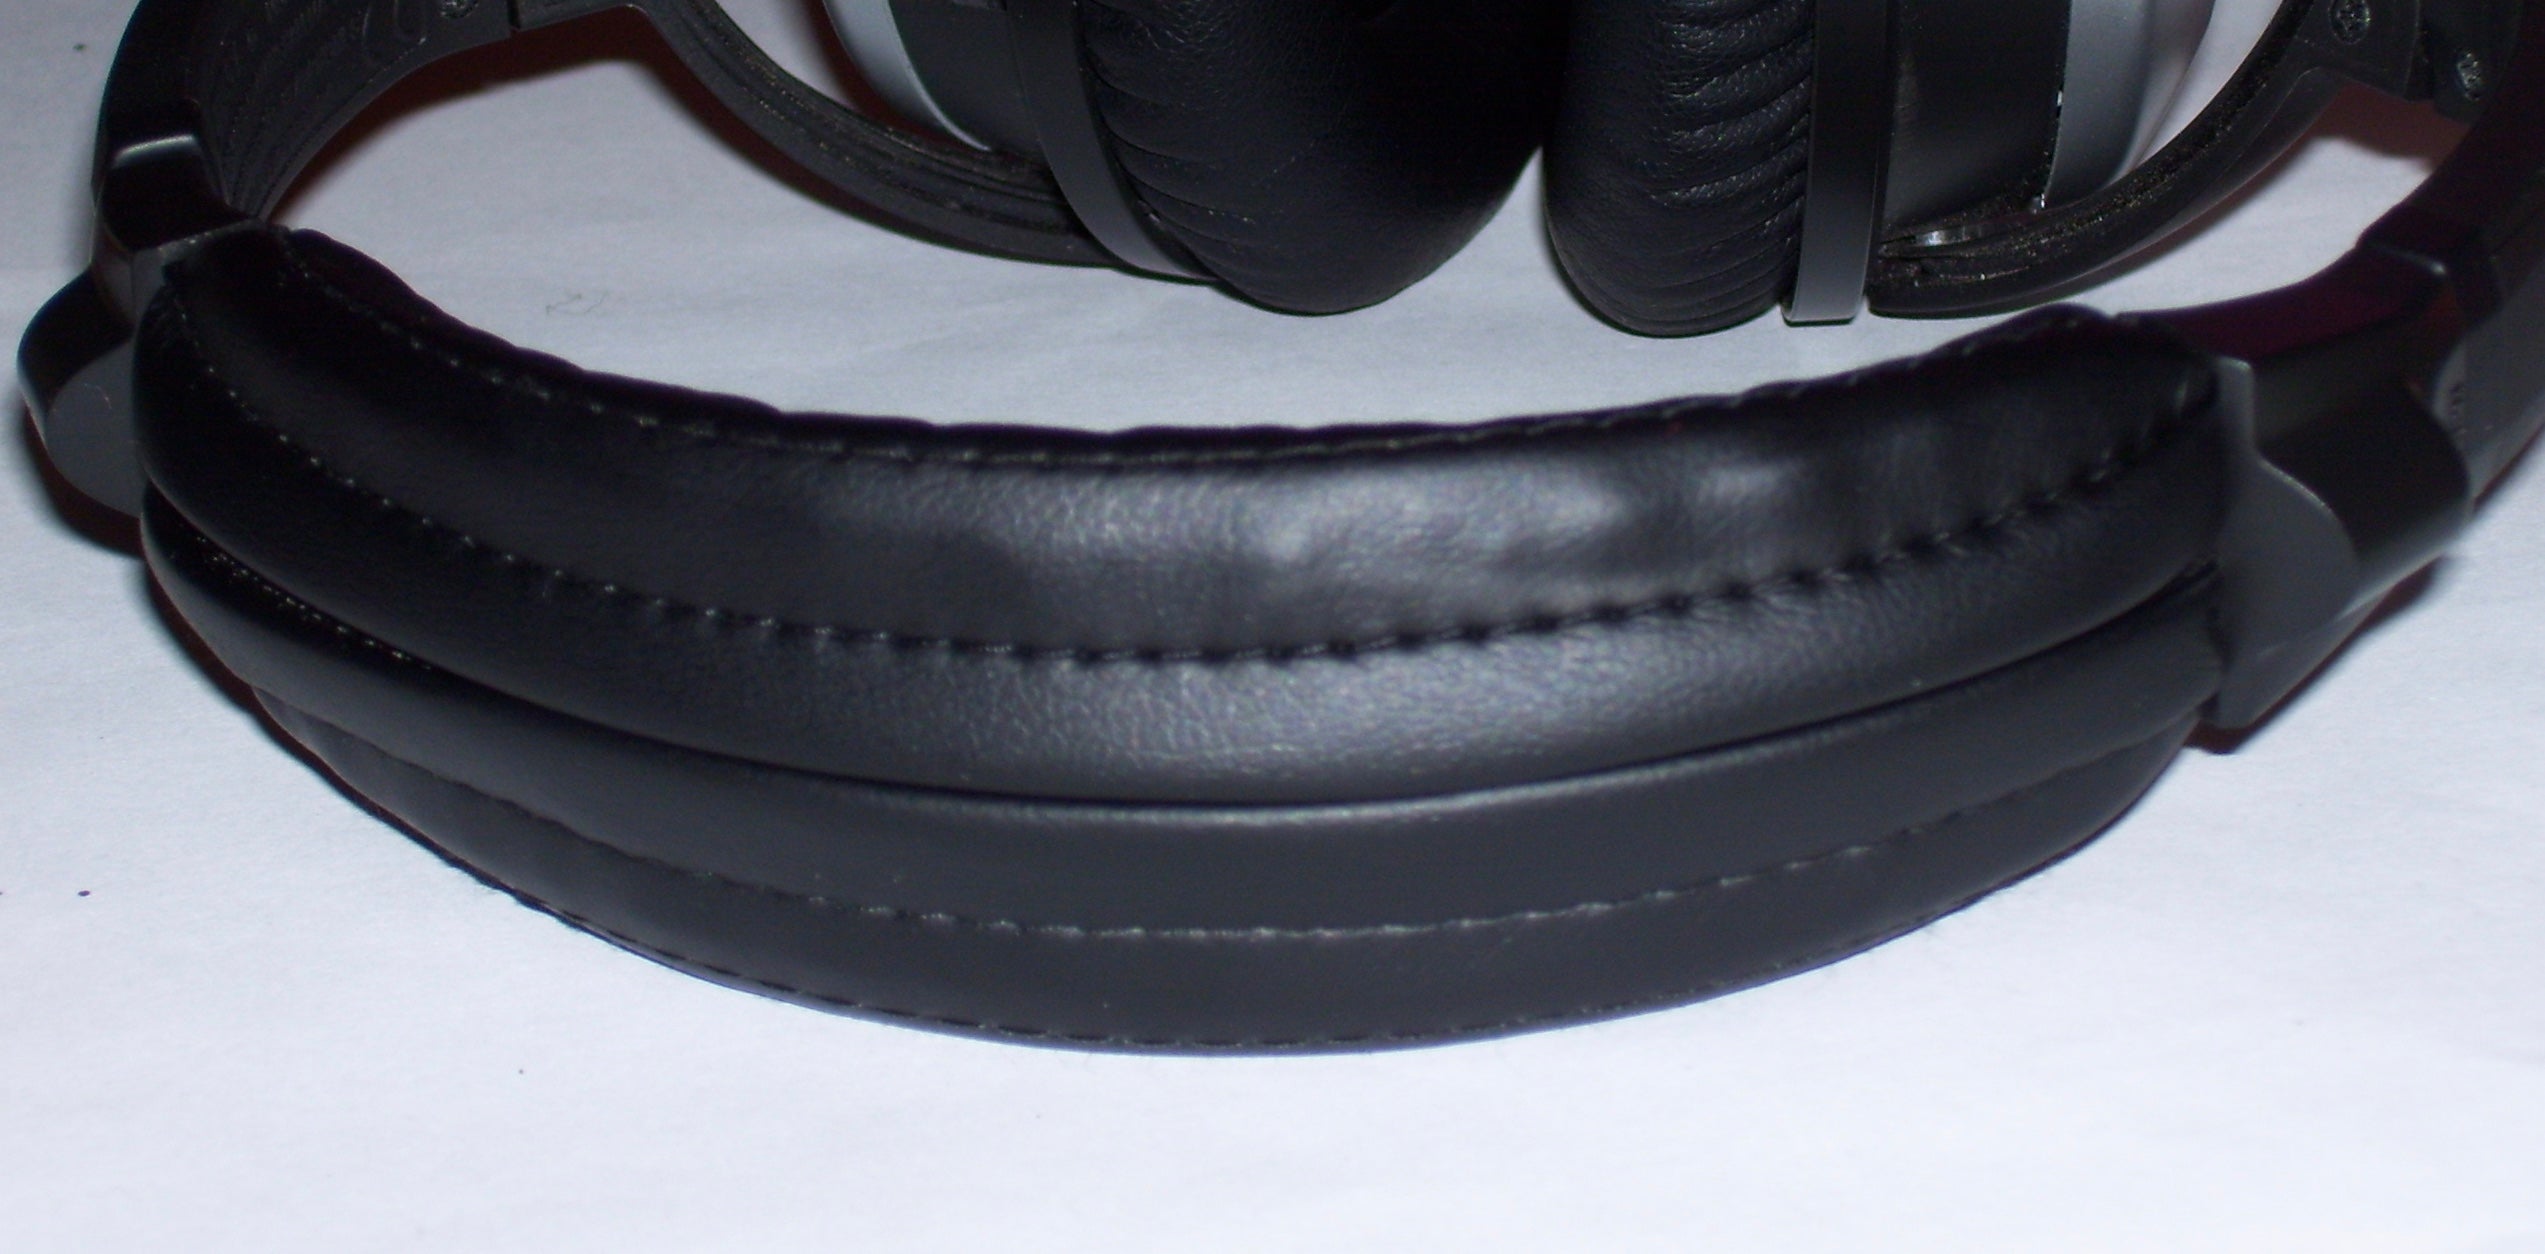 Buy the Bose QuietComfort 15 Acoustic Noise Cancelling Headphones  Parts/Repair